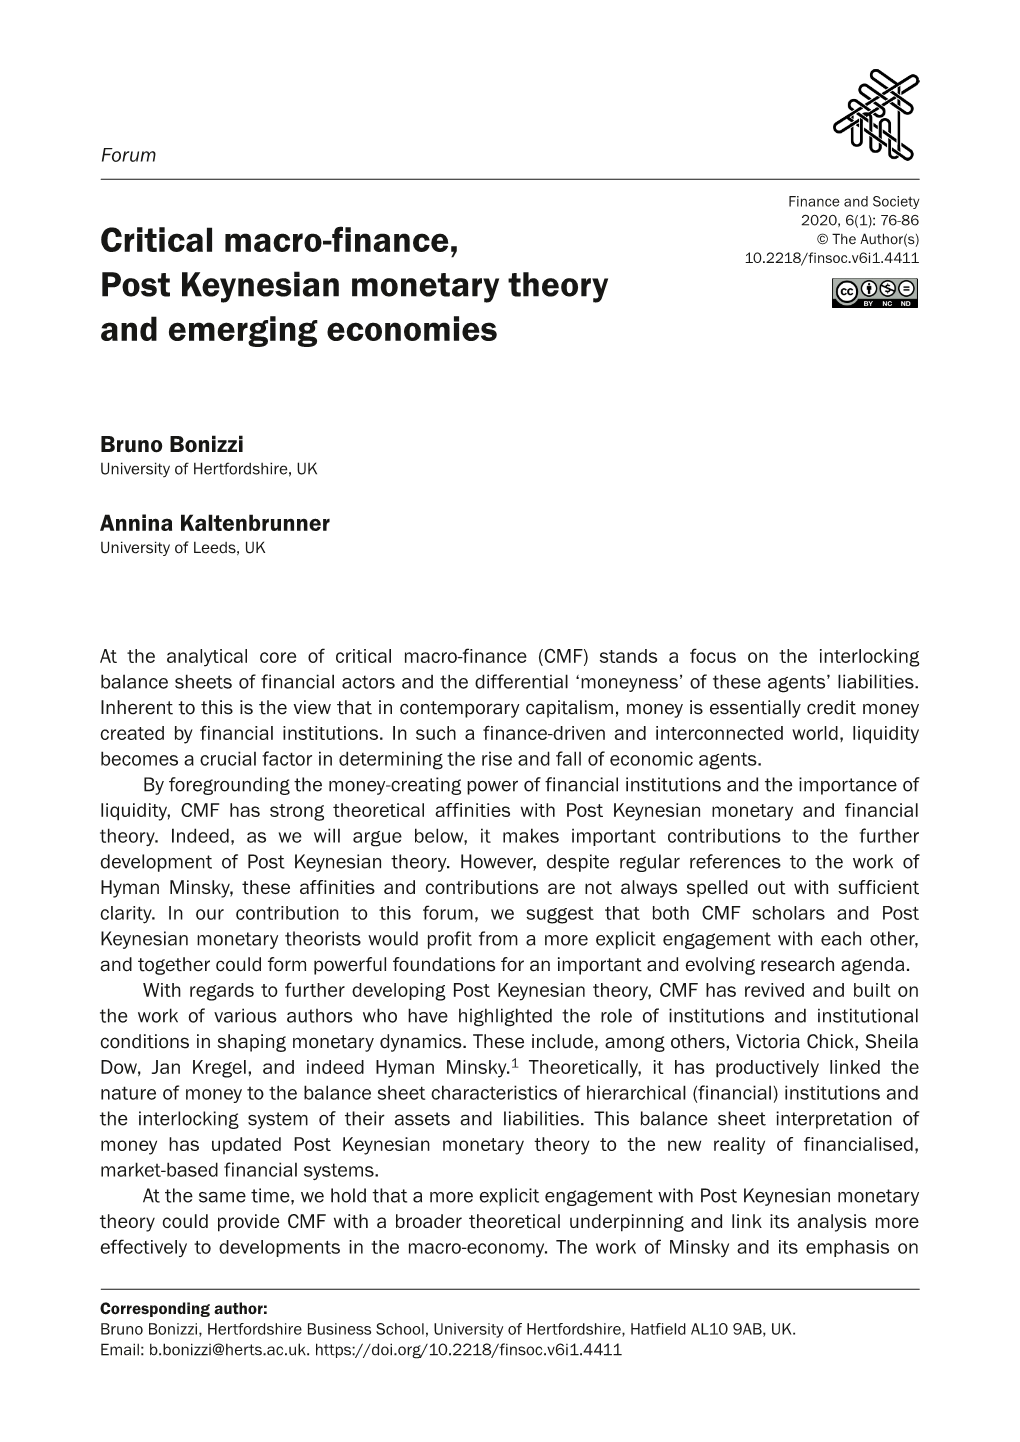 Critical Macro-Finance, Post Keynesian Monetary Theory And